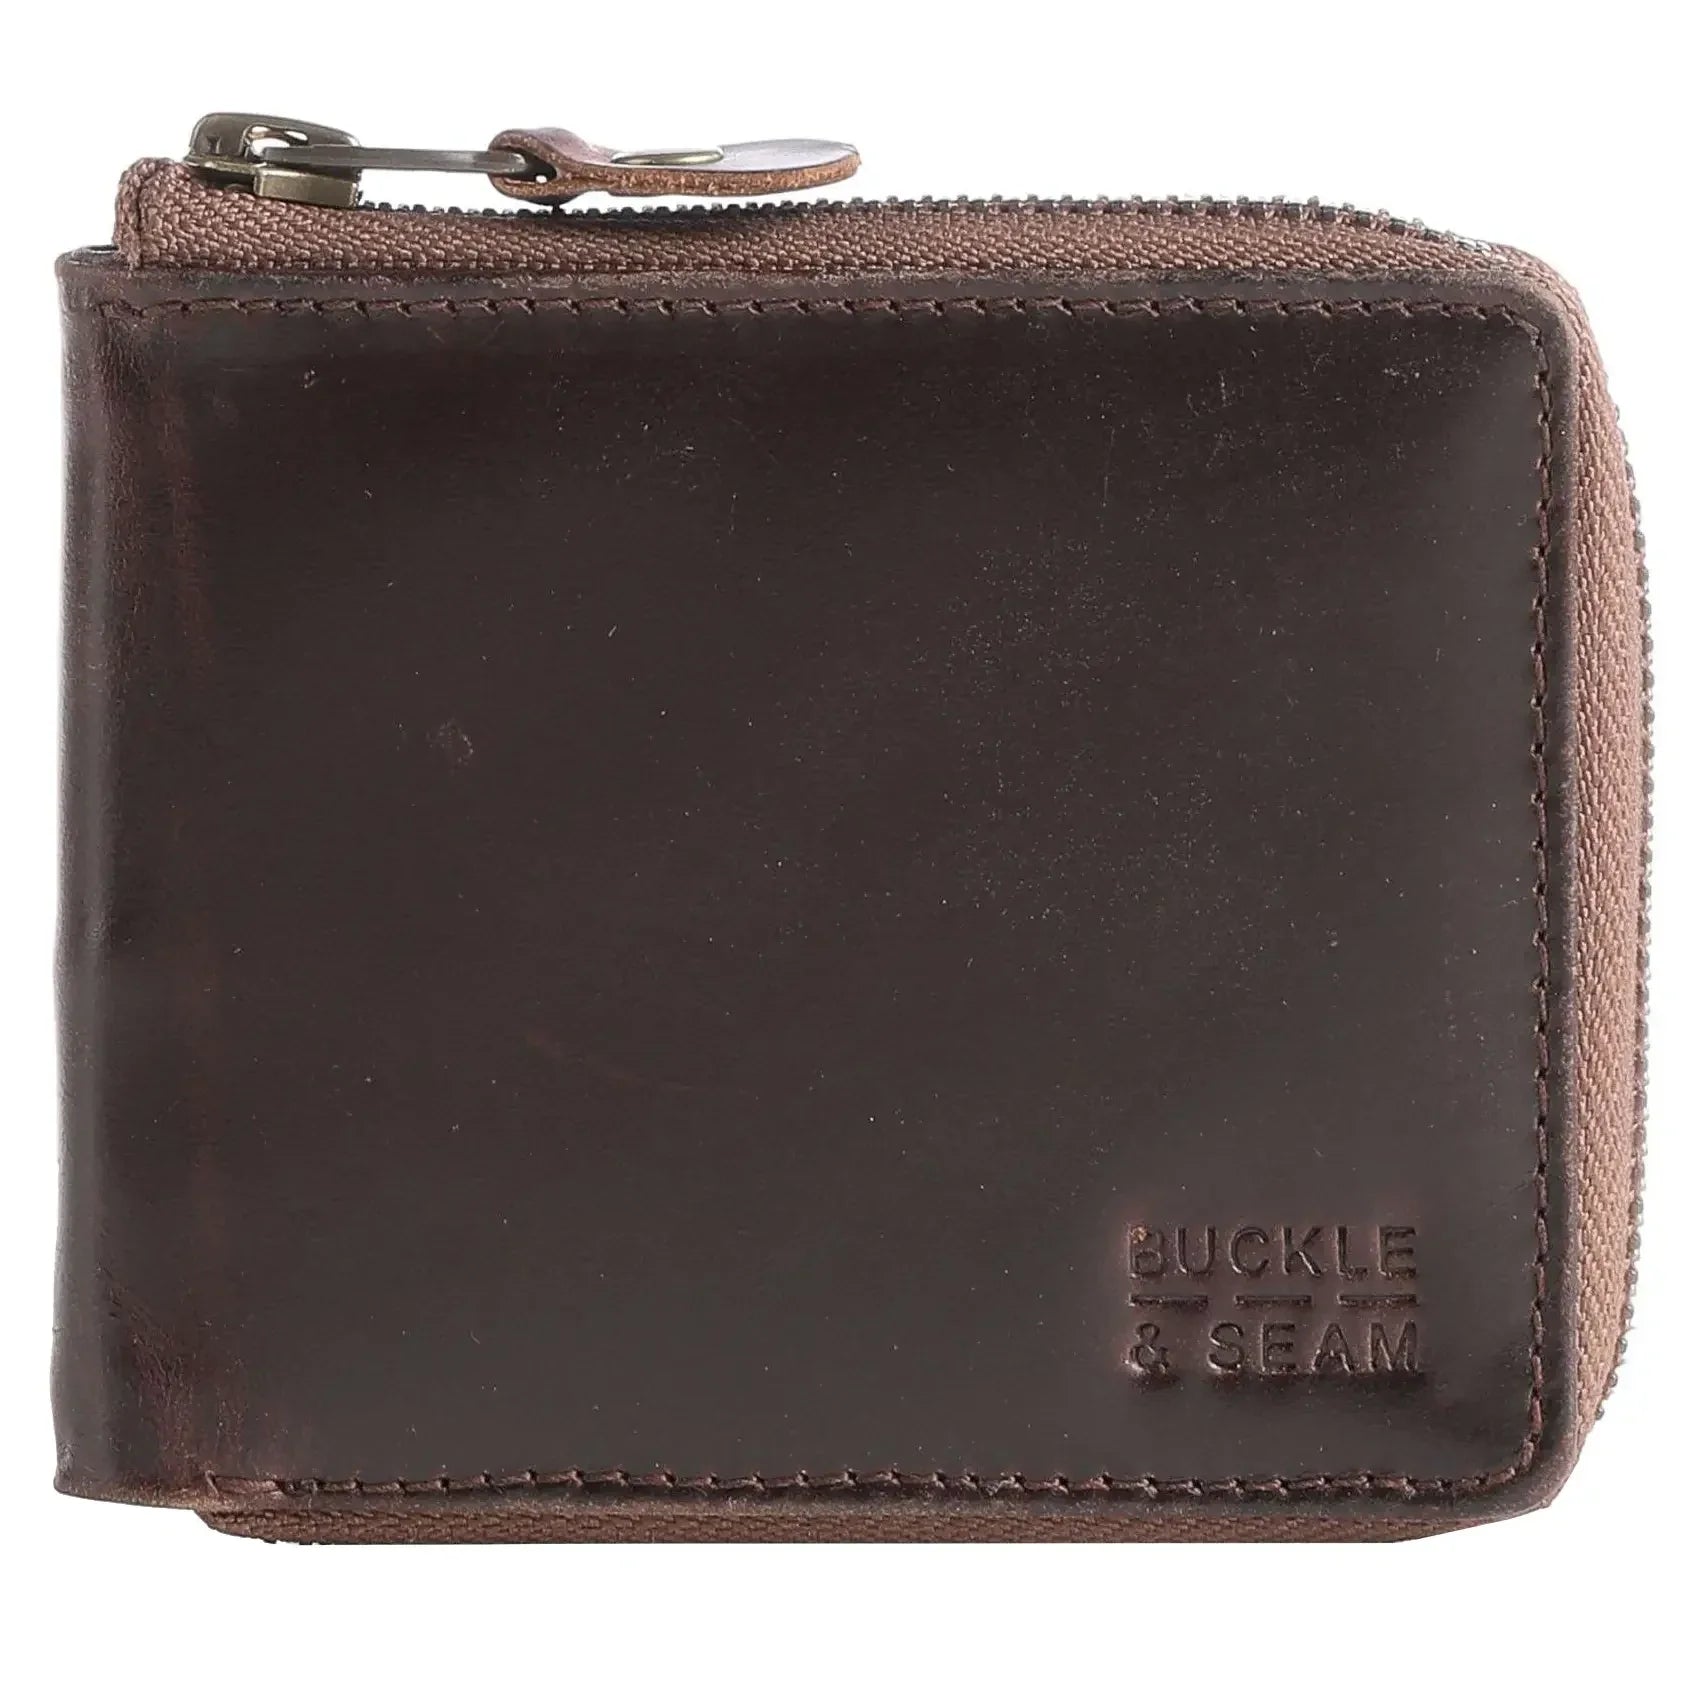 Buckle & Seam wallet Grind 12 cm - Brown